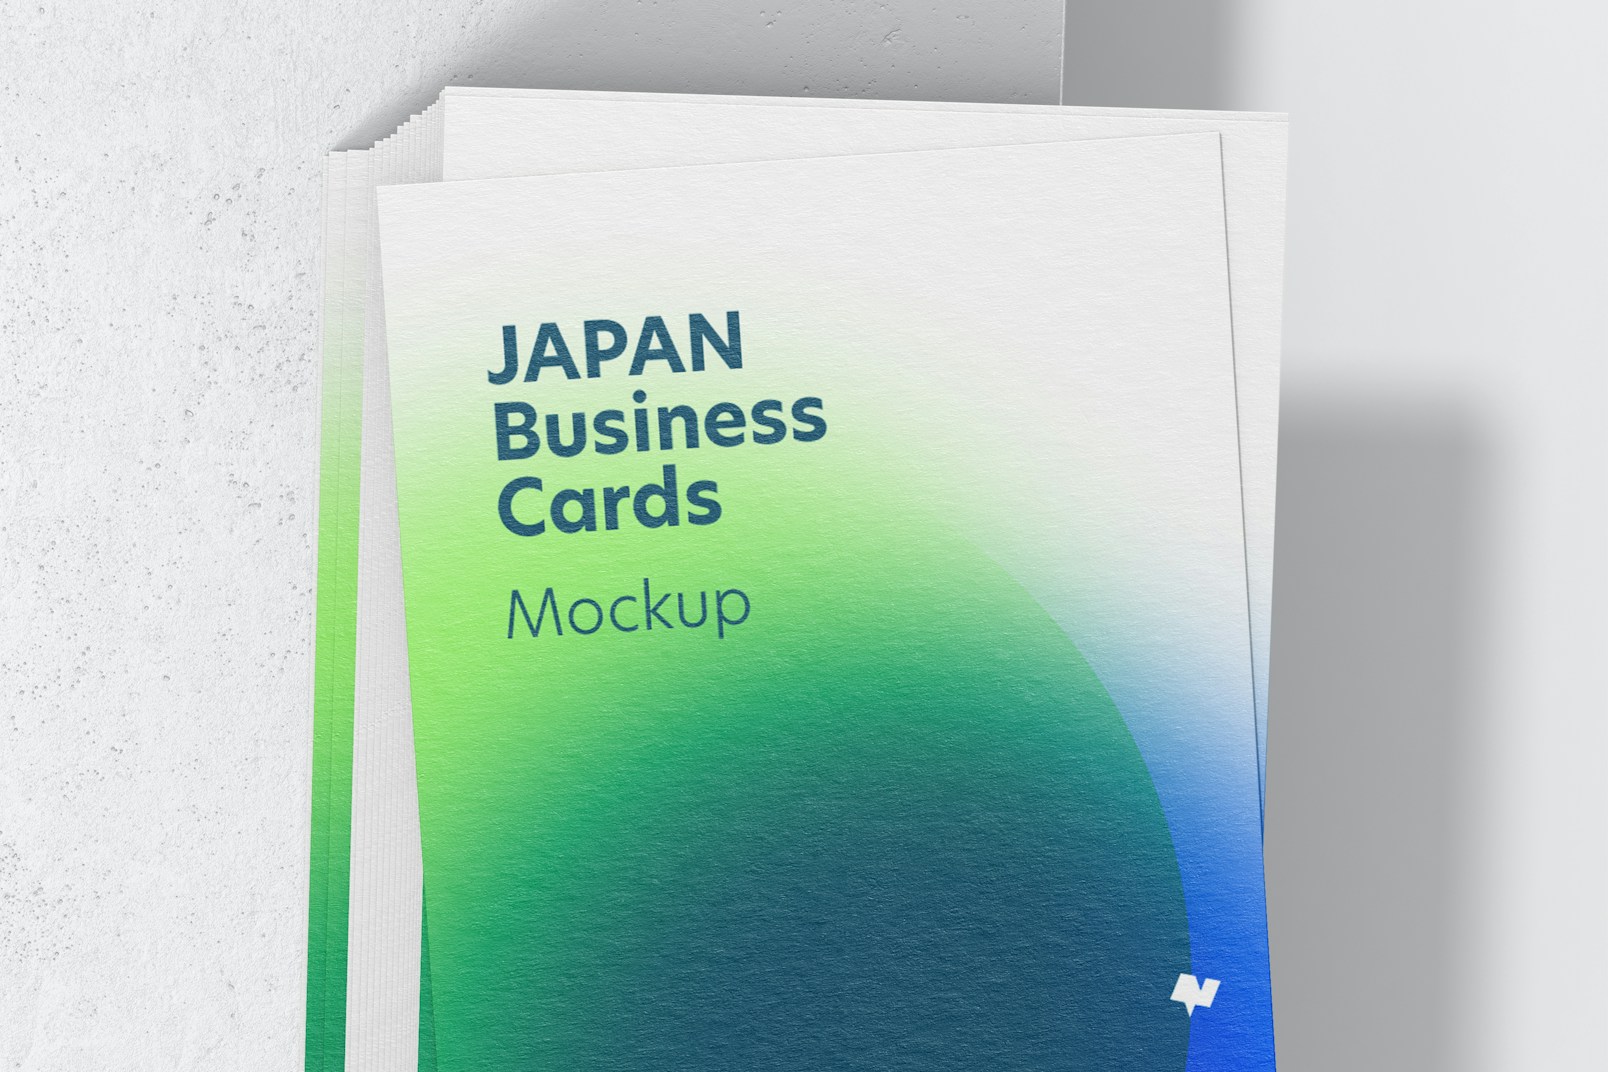 Japan Portrait Business Cards Mockup, Top View